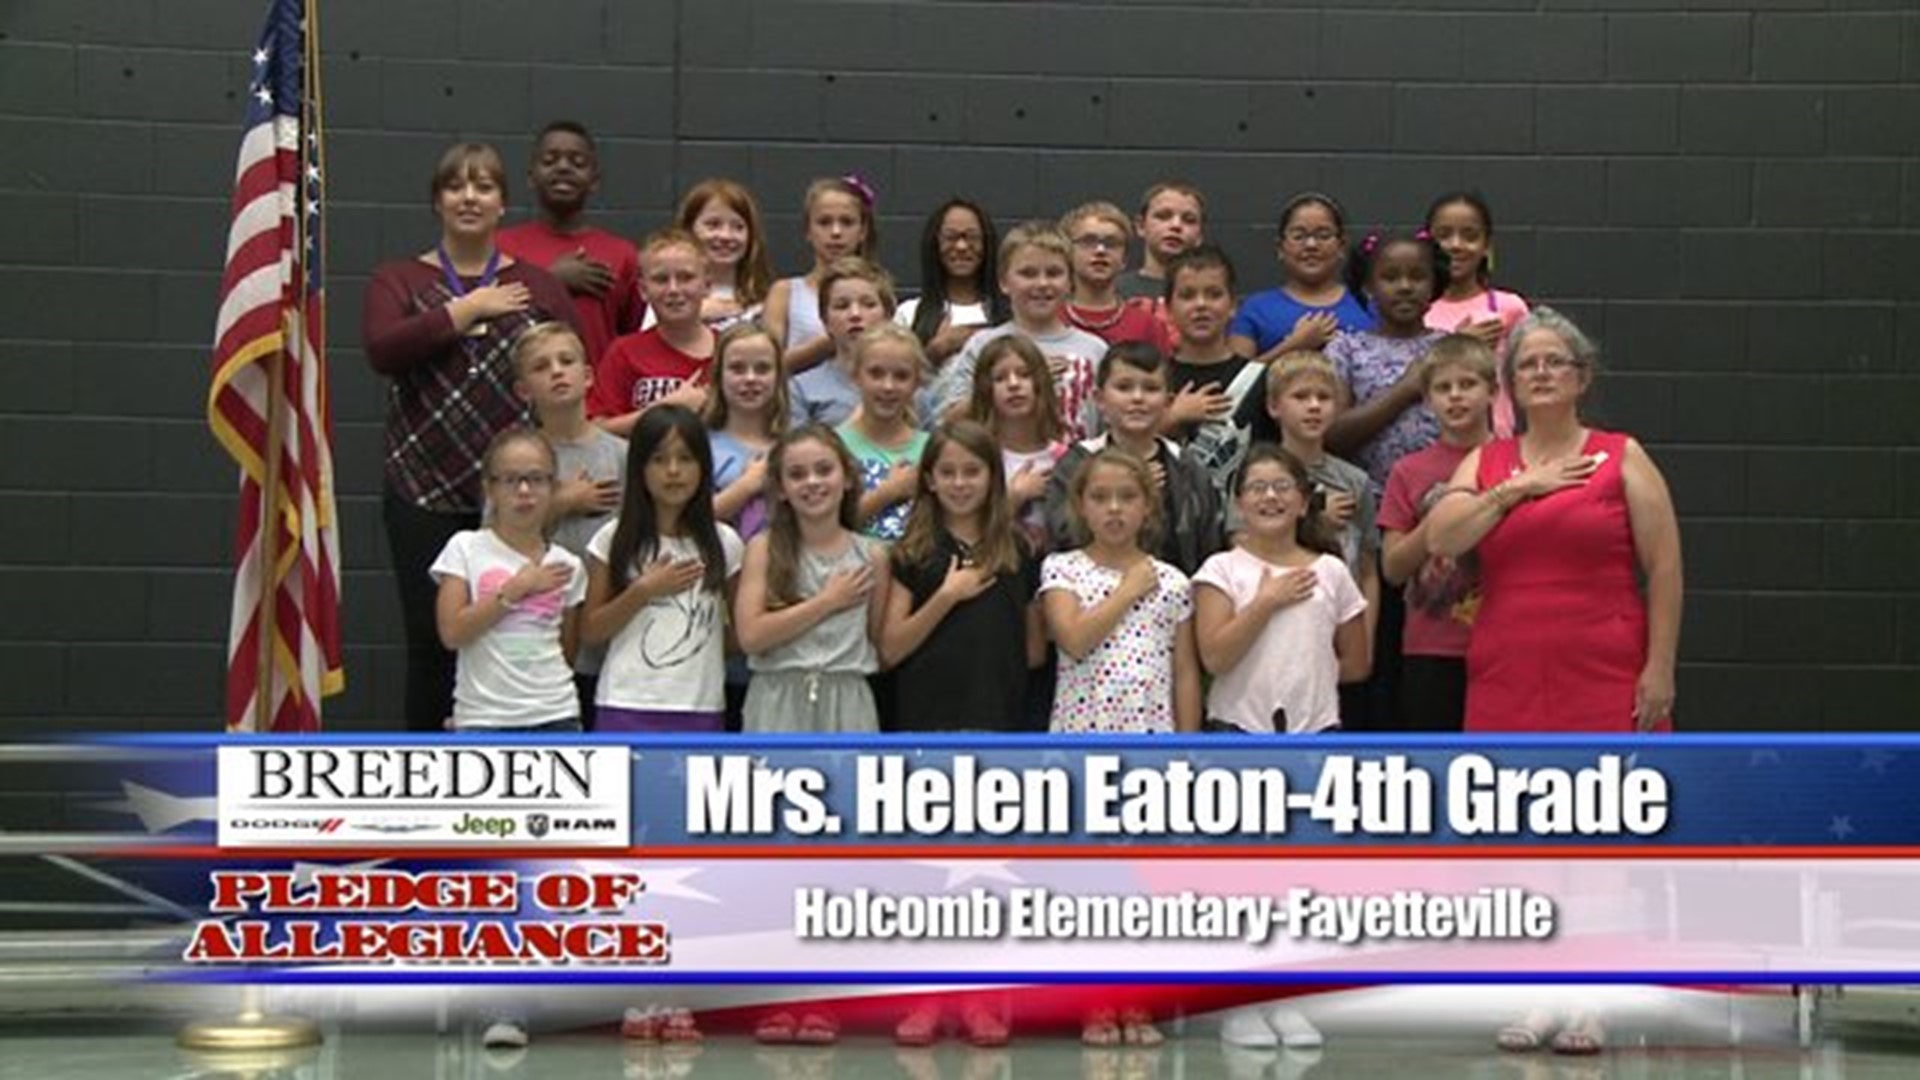 Holcomb Elementary, Fayetteville - Mrs. Helen Eaton - 4th Grade